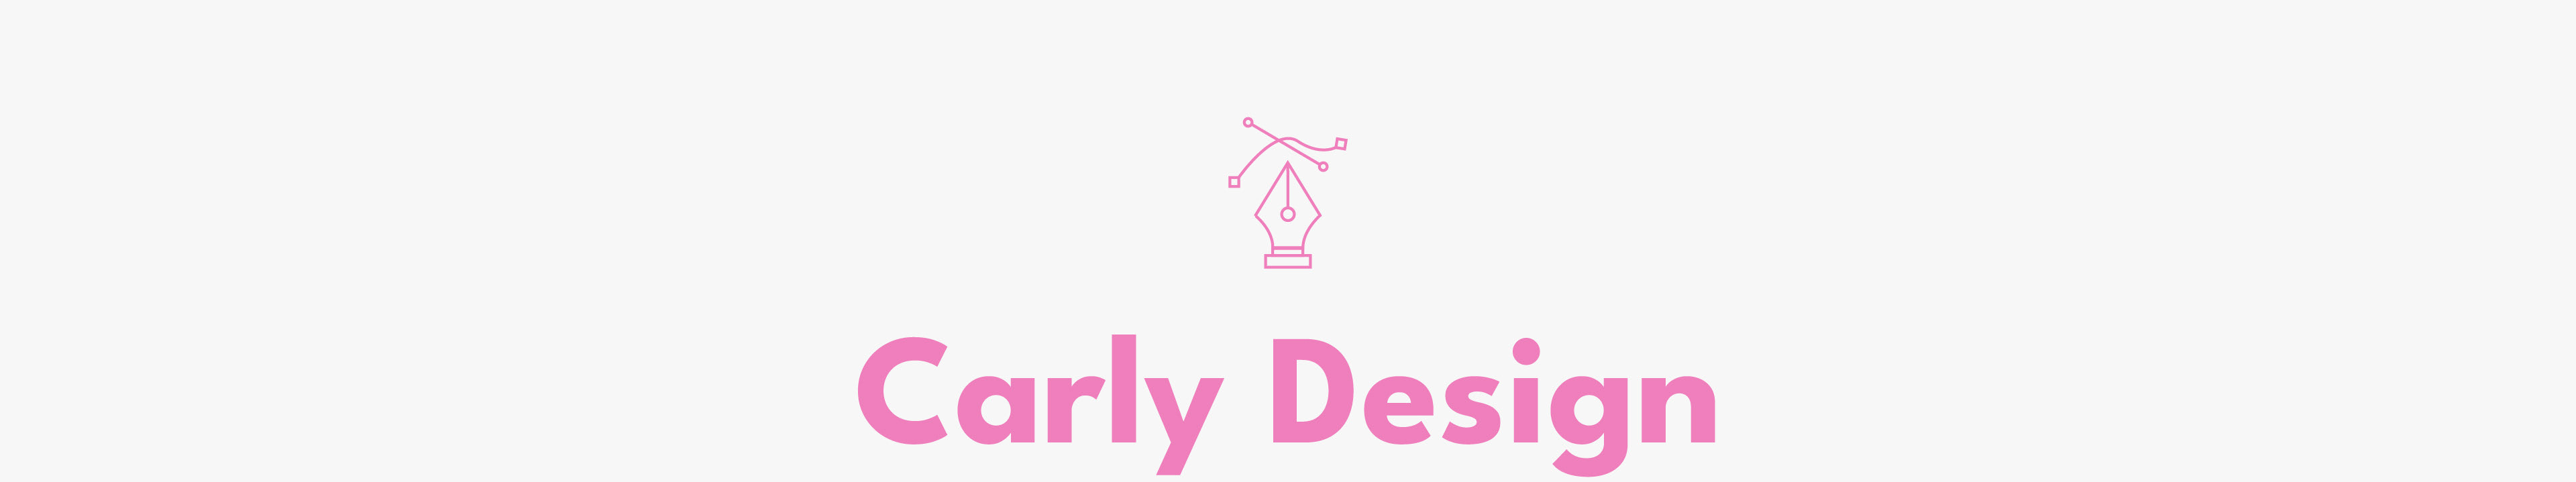 Carly Design's profile banner